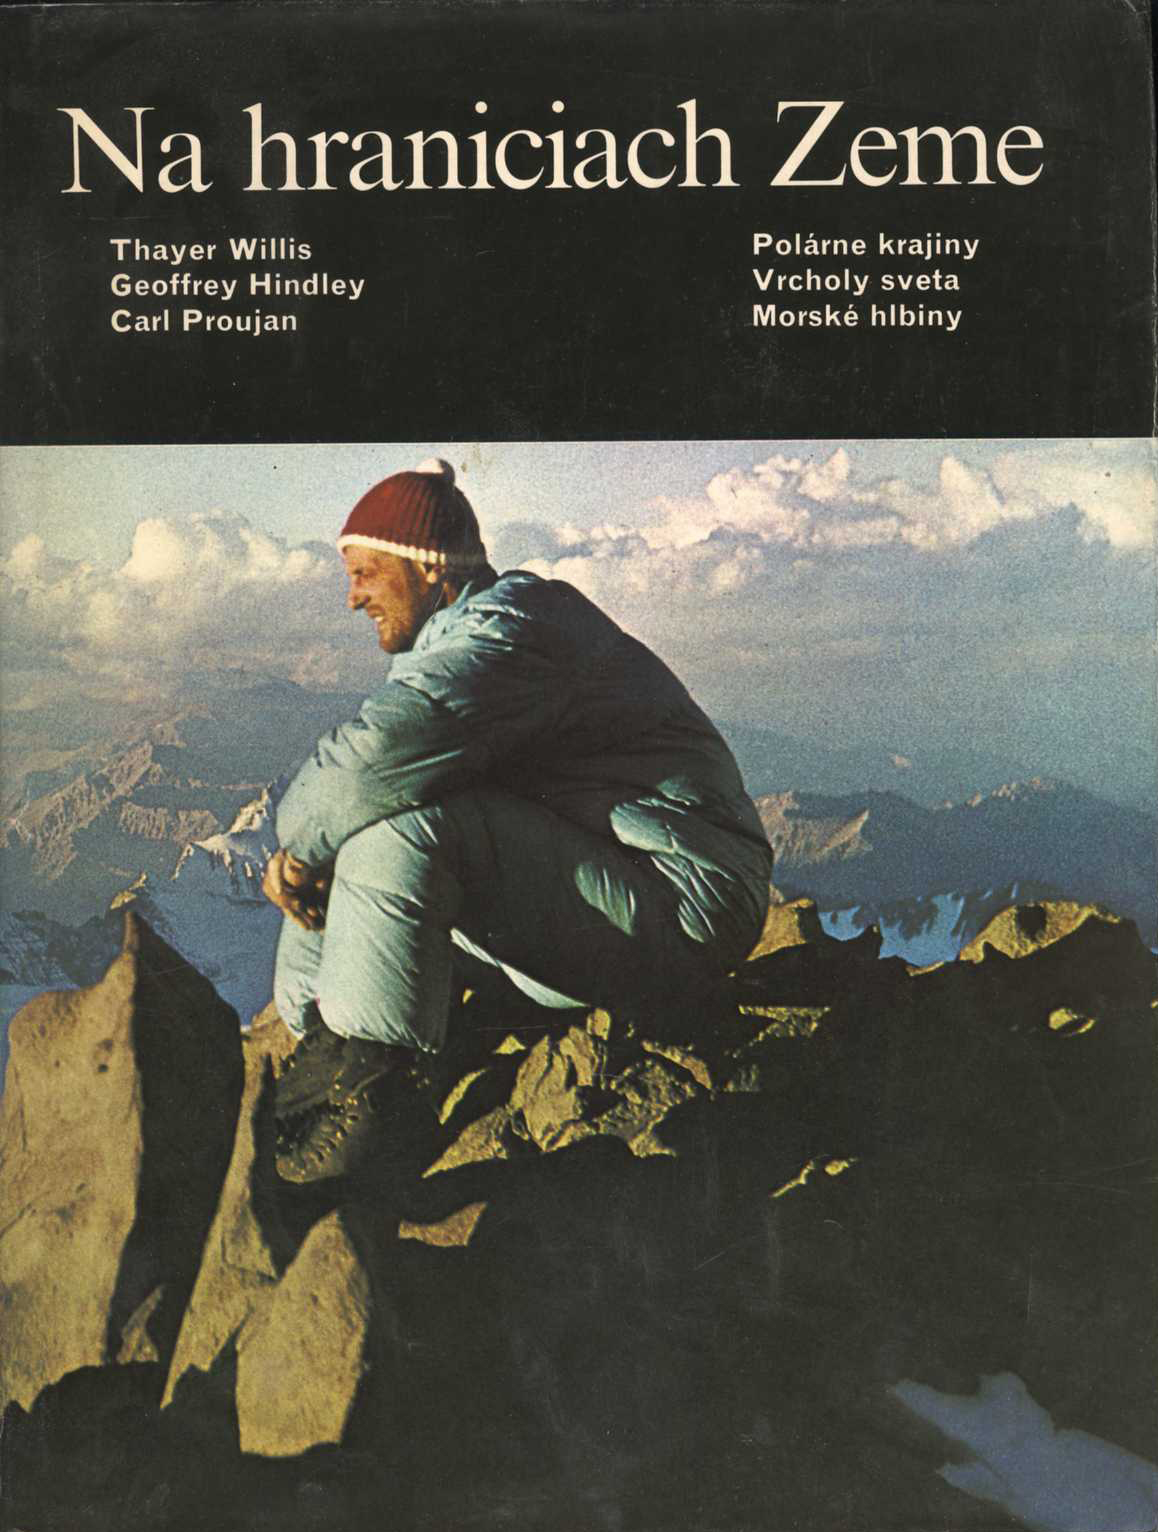 Na hraniciach Zeme (Thayer Willis, Geoffrey Hindley, Carl Proujan)